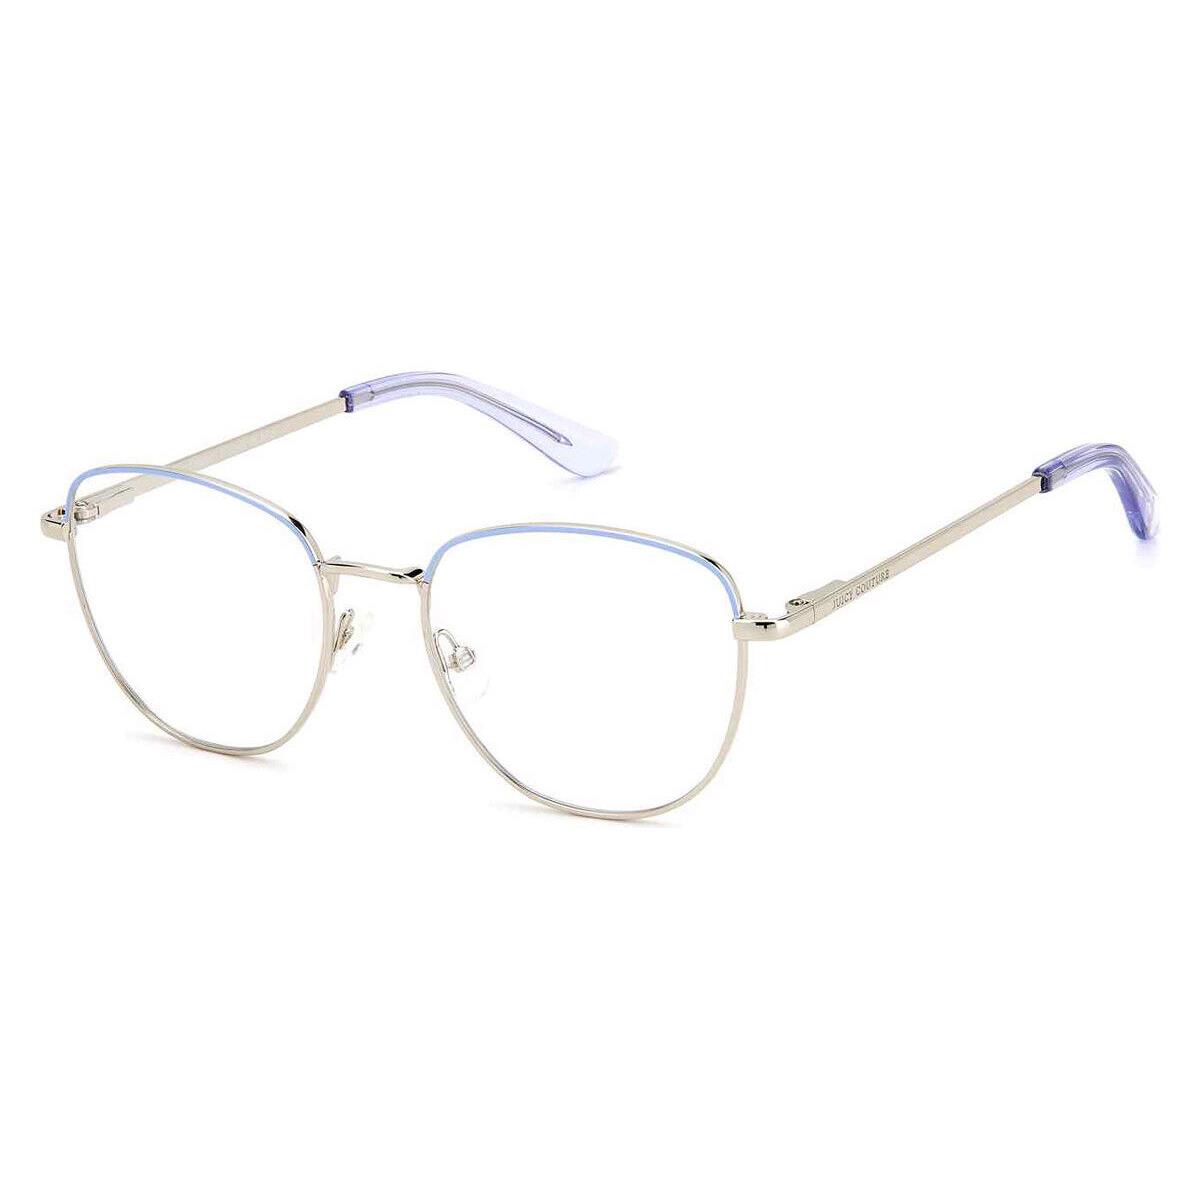 Juicy Couture 313 Eyeglasses Women Violet Oval 50mm